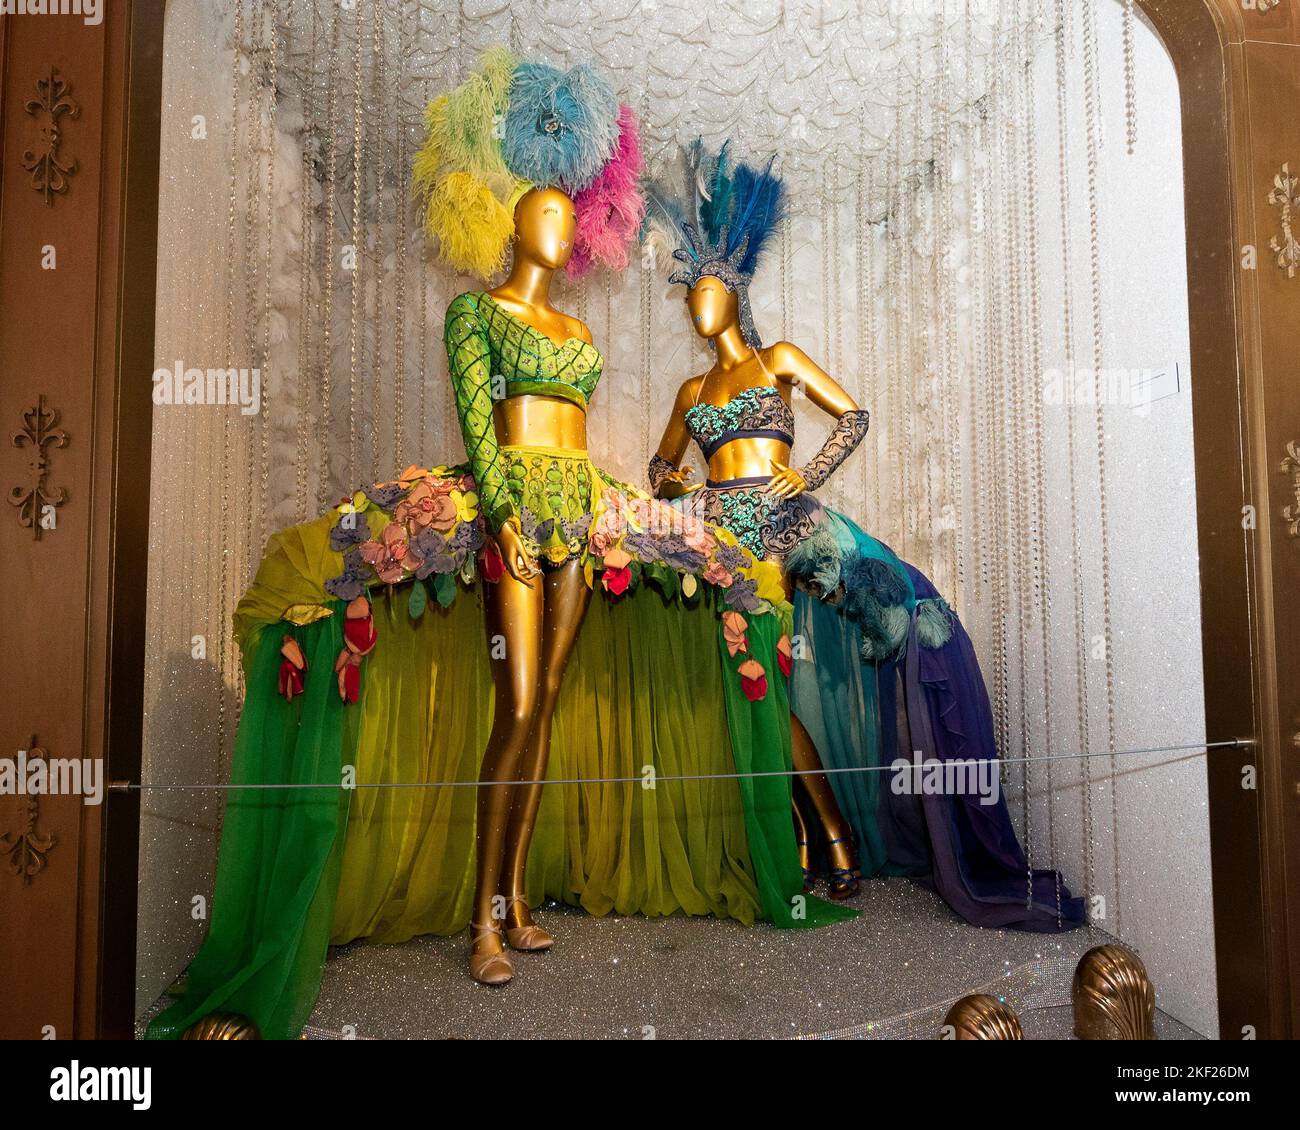 Ziegfeld follies broadway hi-res stock photography and images - Alamy